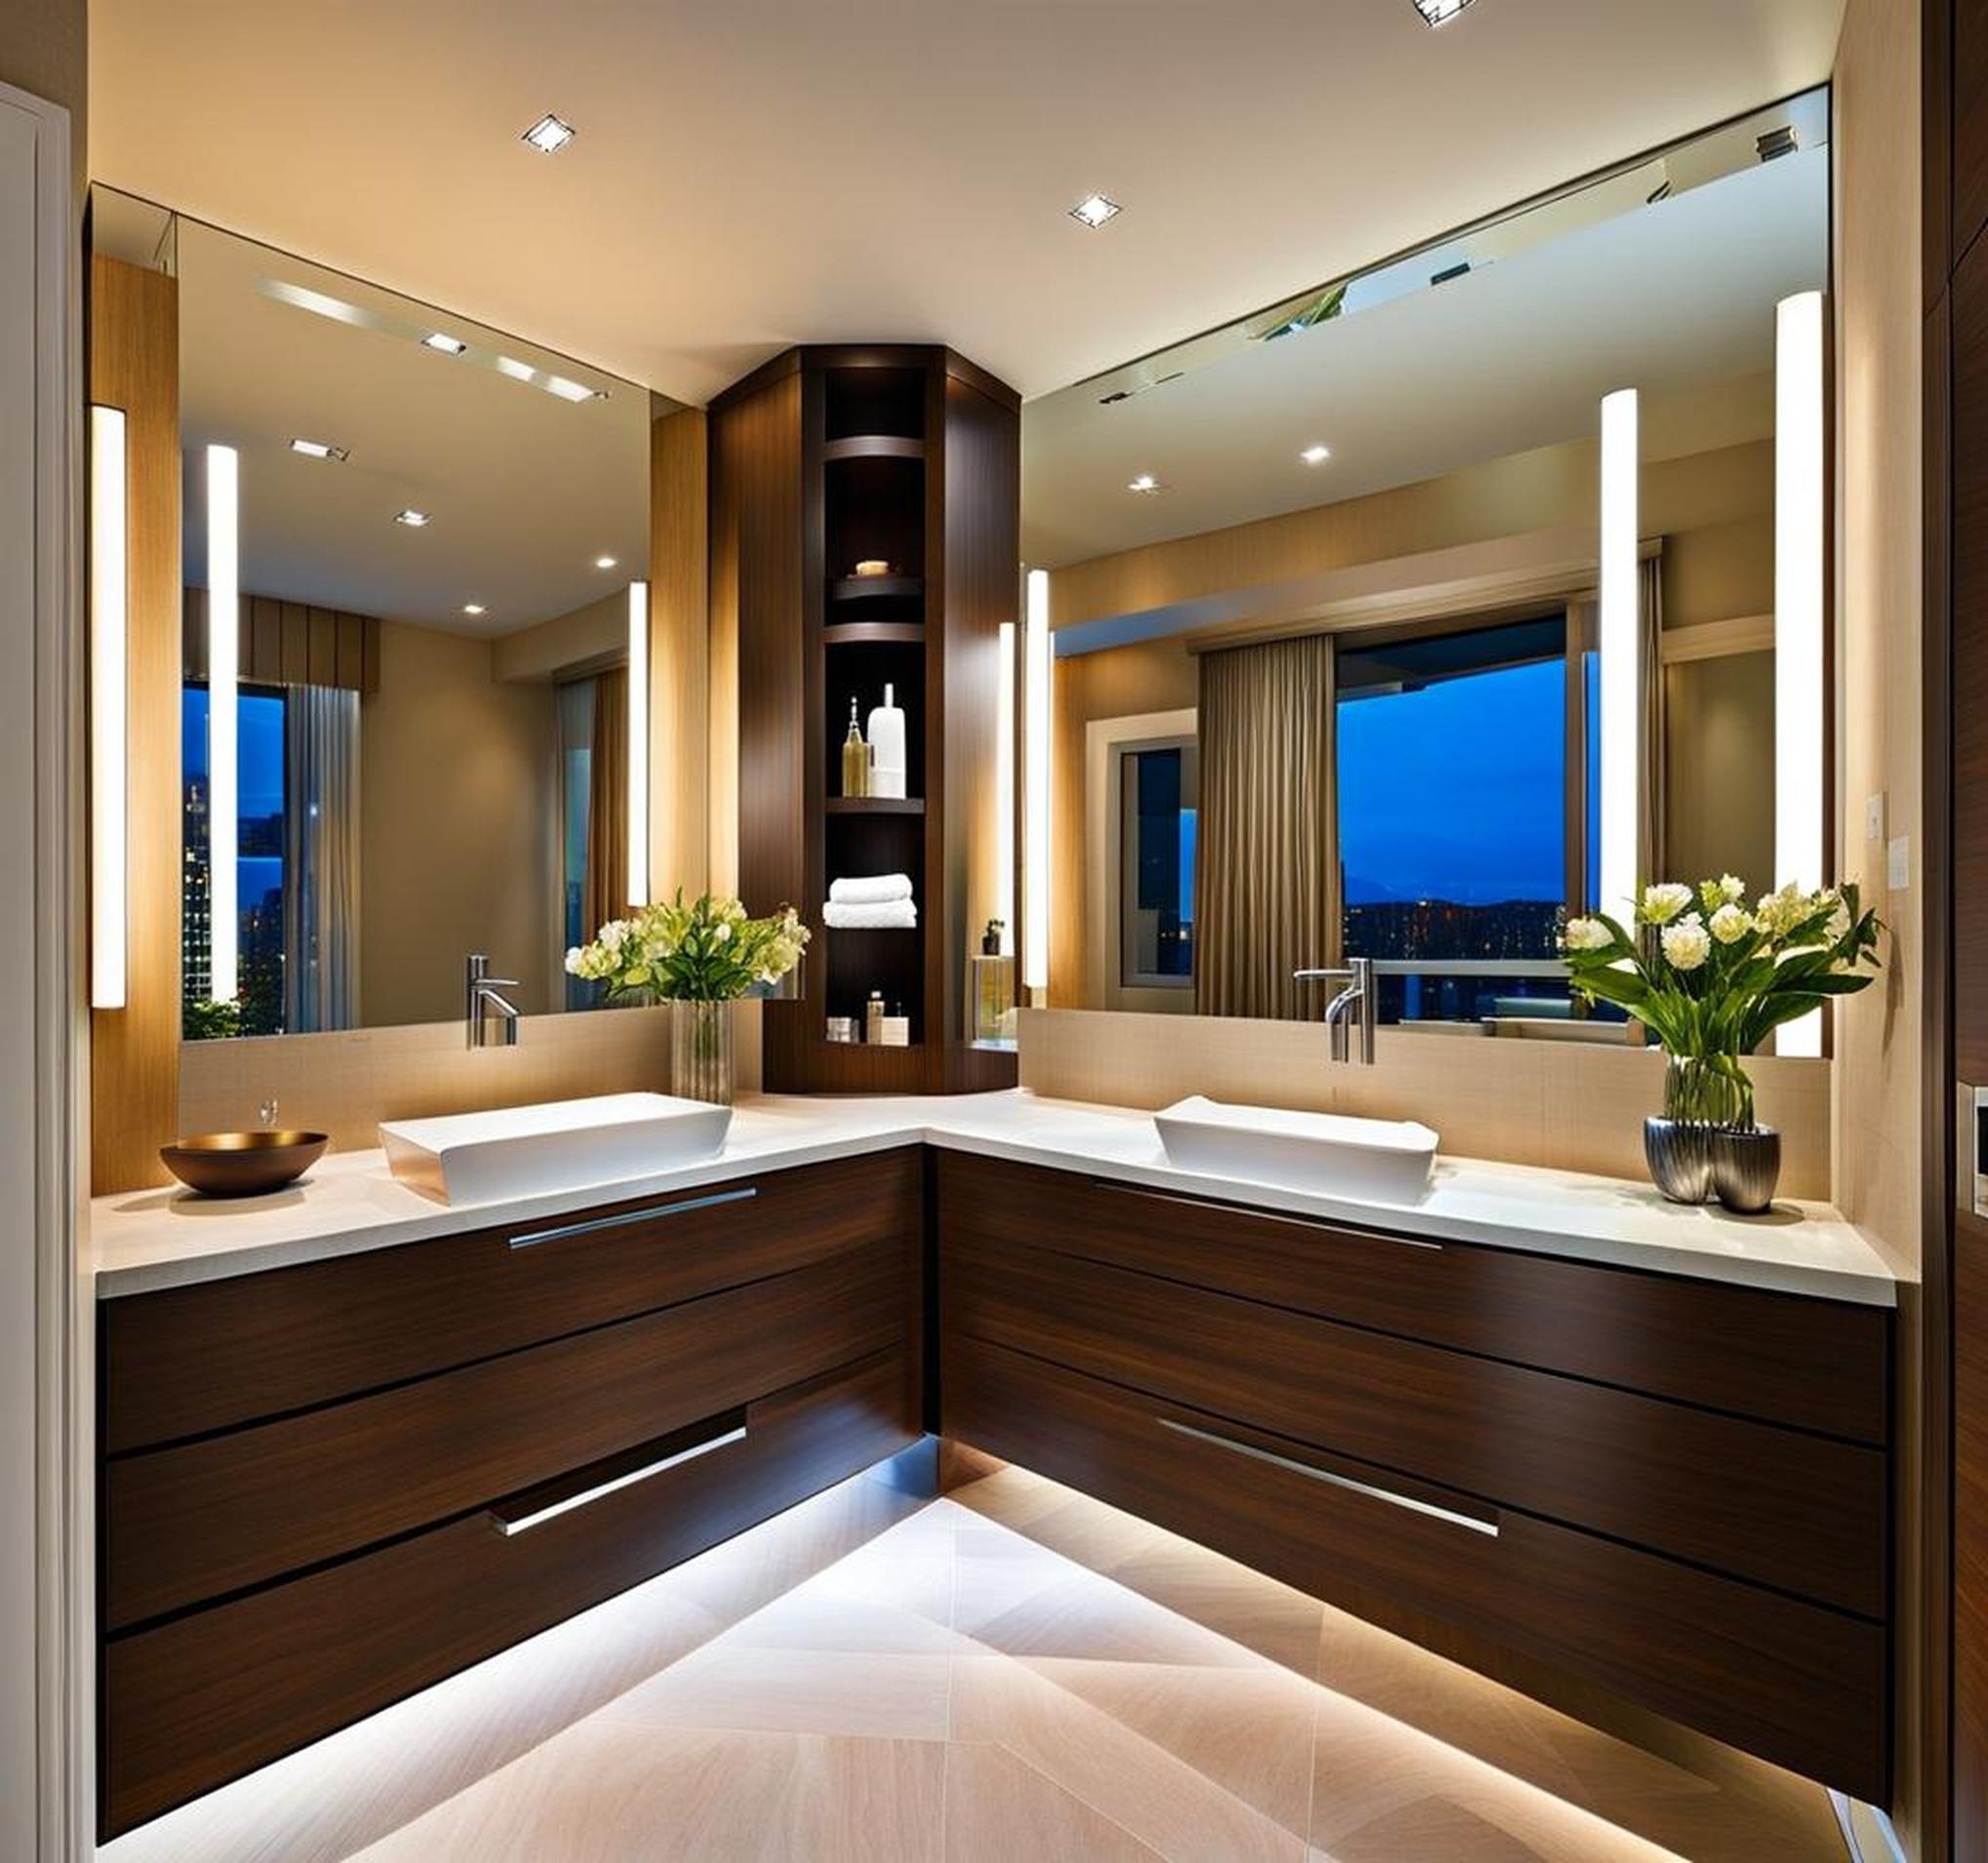 Shape Up Your Double Vanity Bathroom with Creative Mirror Ideas